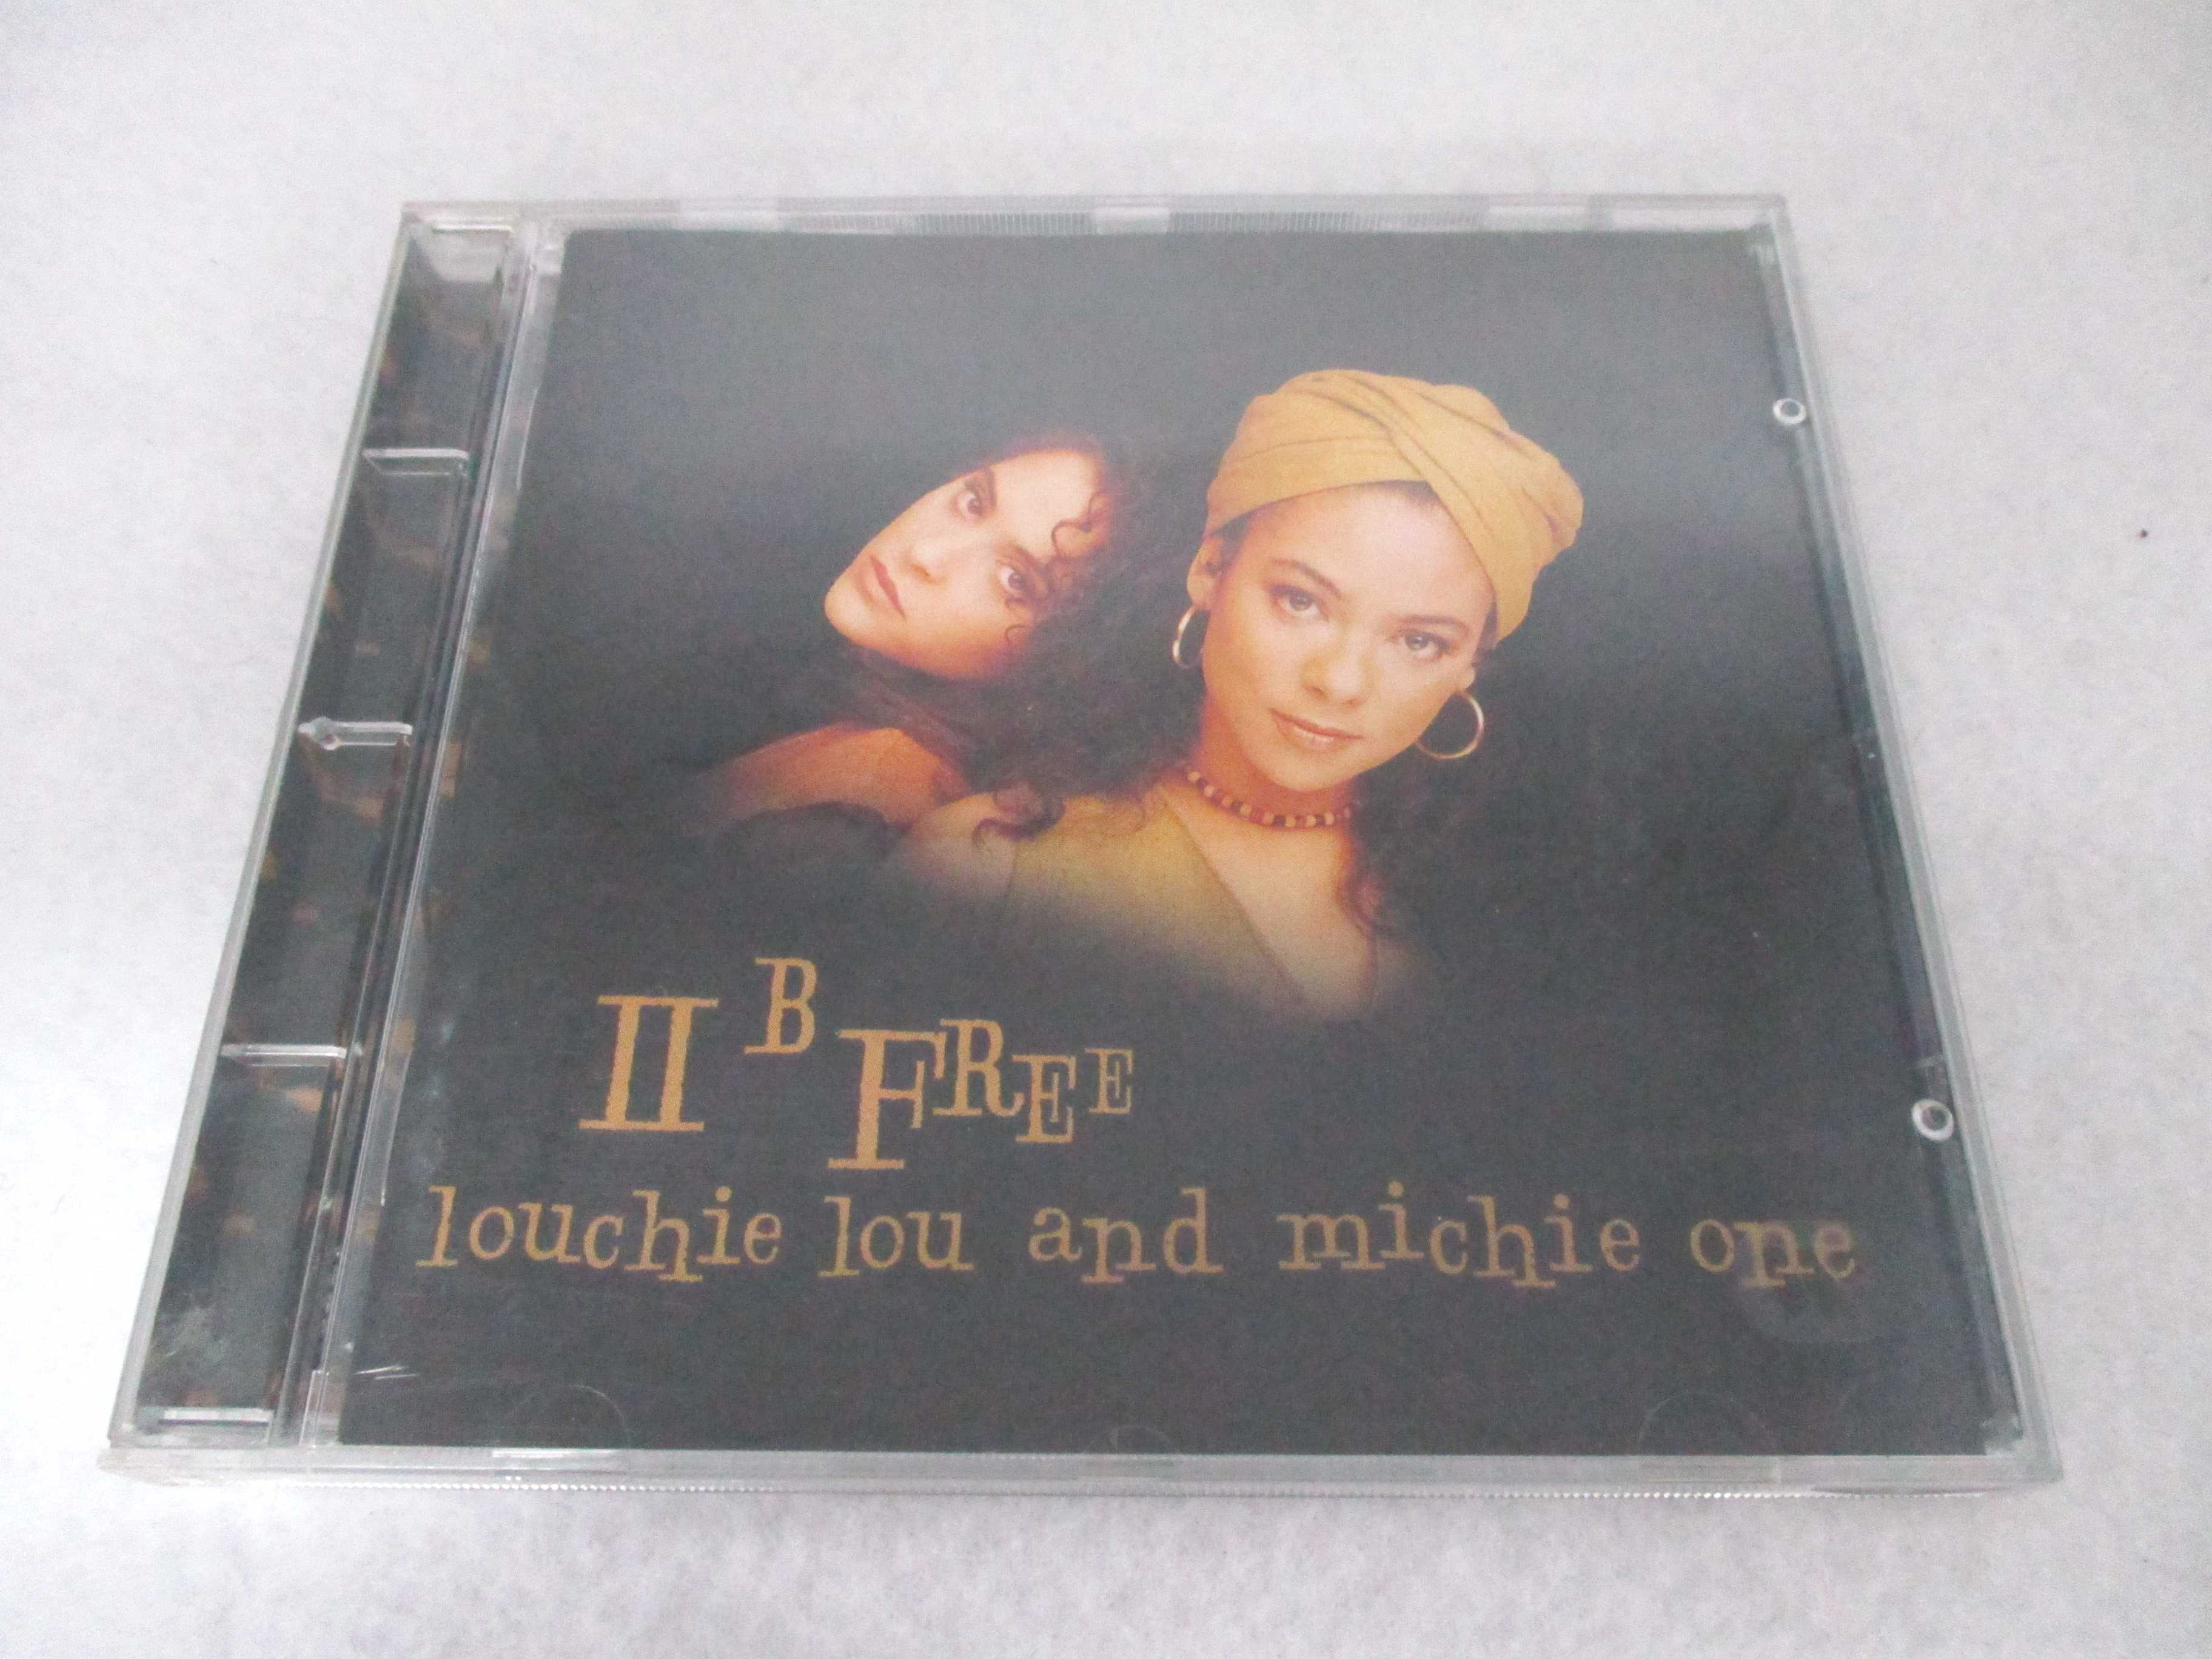 AC06553 【中古】 【CD】 2 B FREE ※輸入盤/louchie lou & michie one